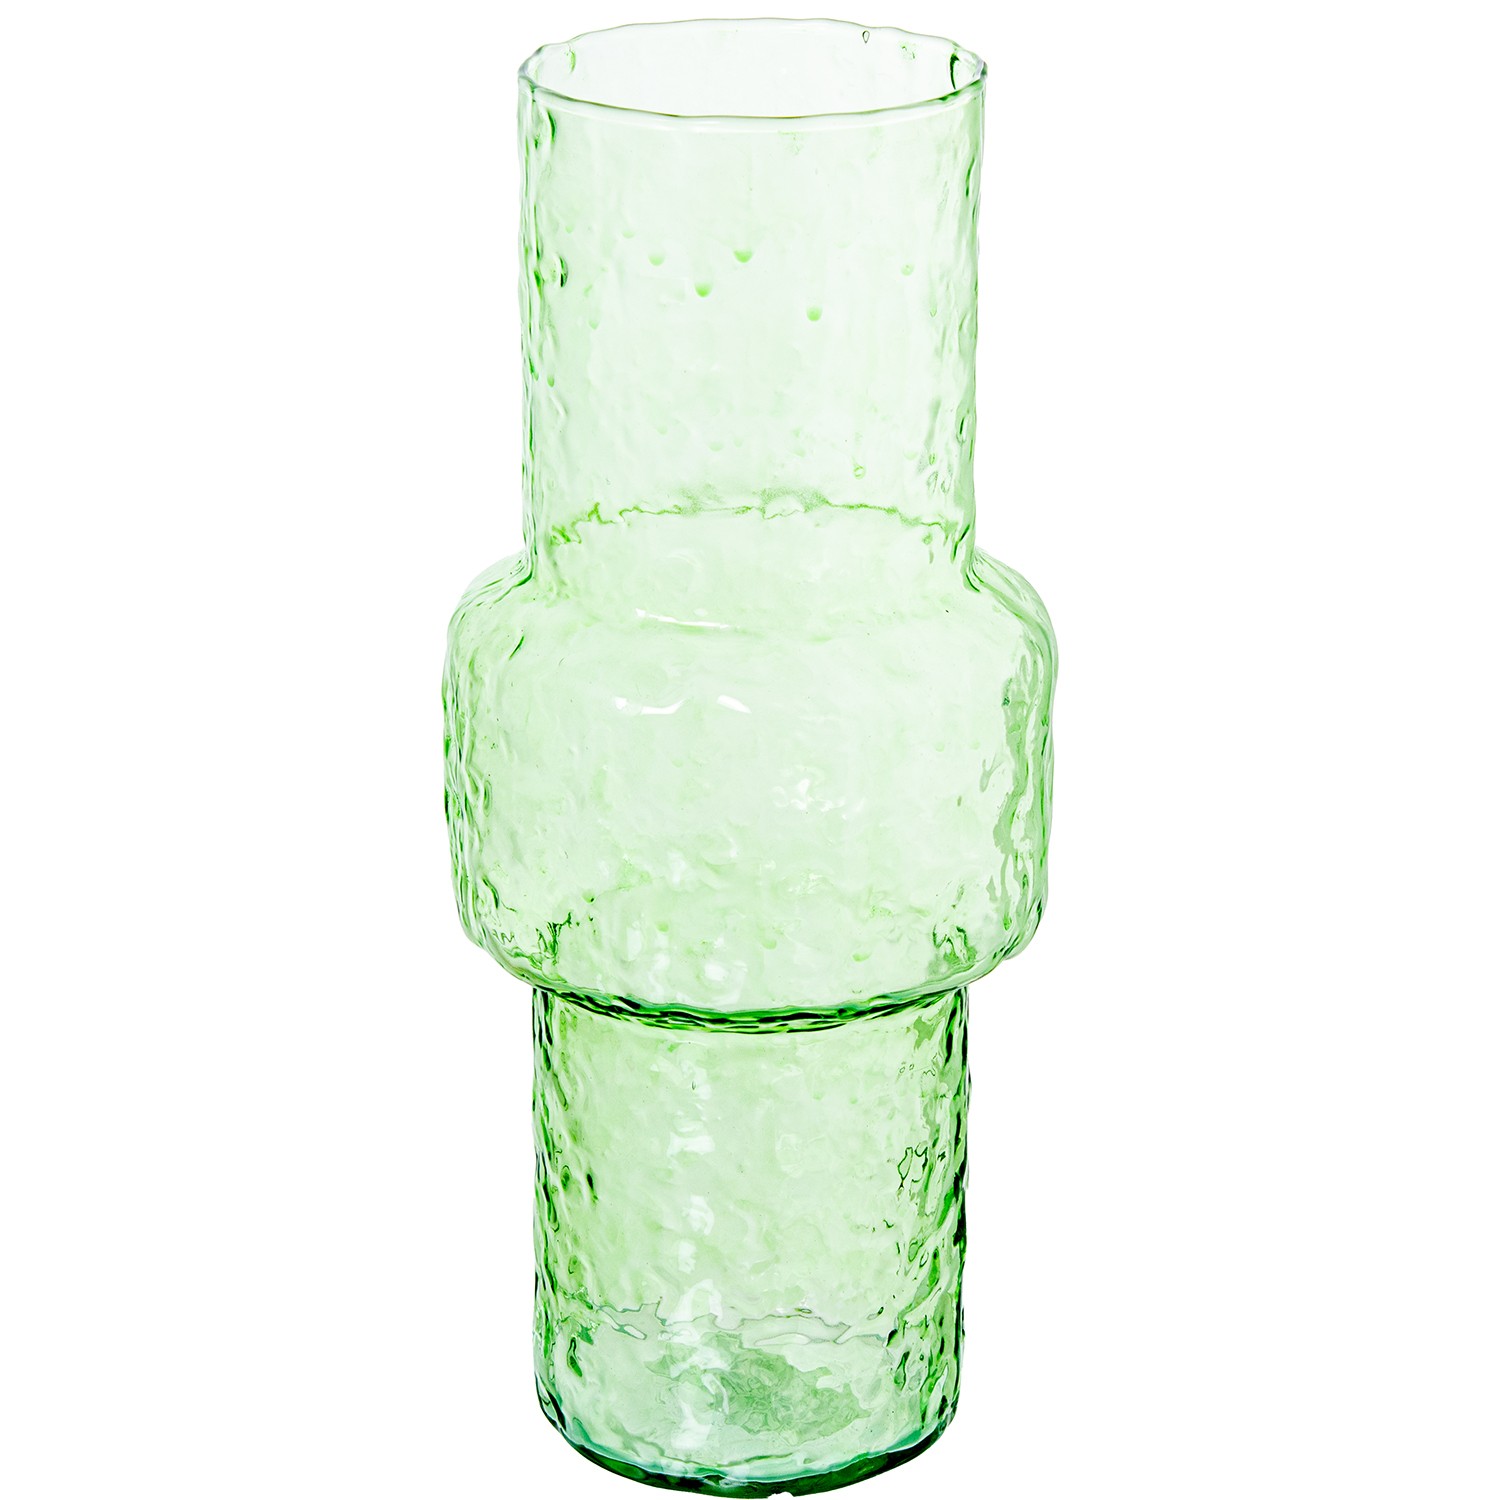 35657-jarron-cristal-verde-33-cm.jfif